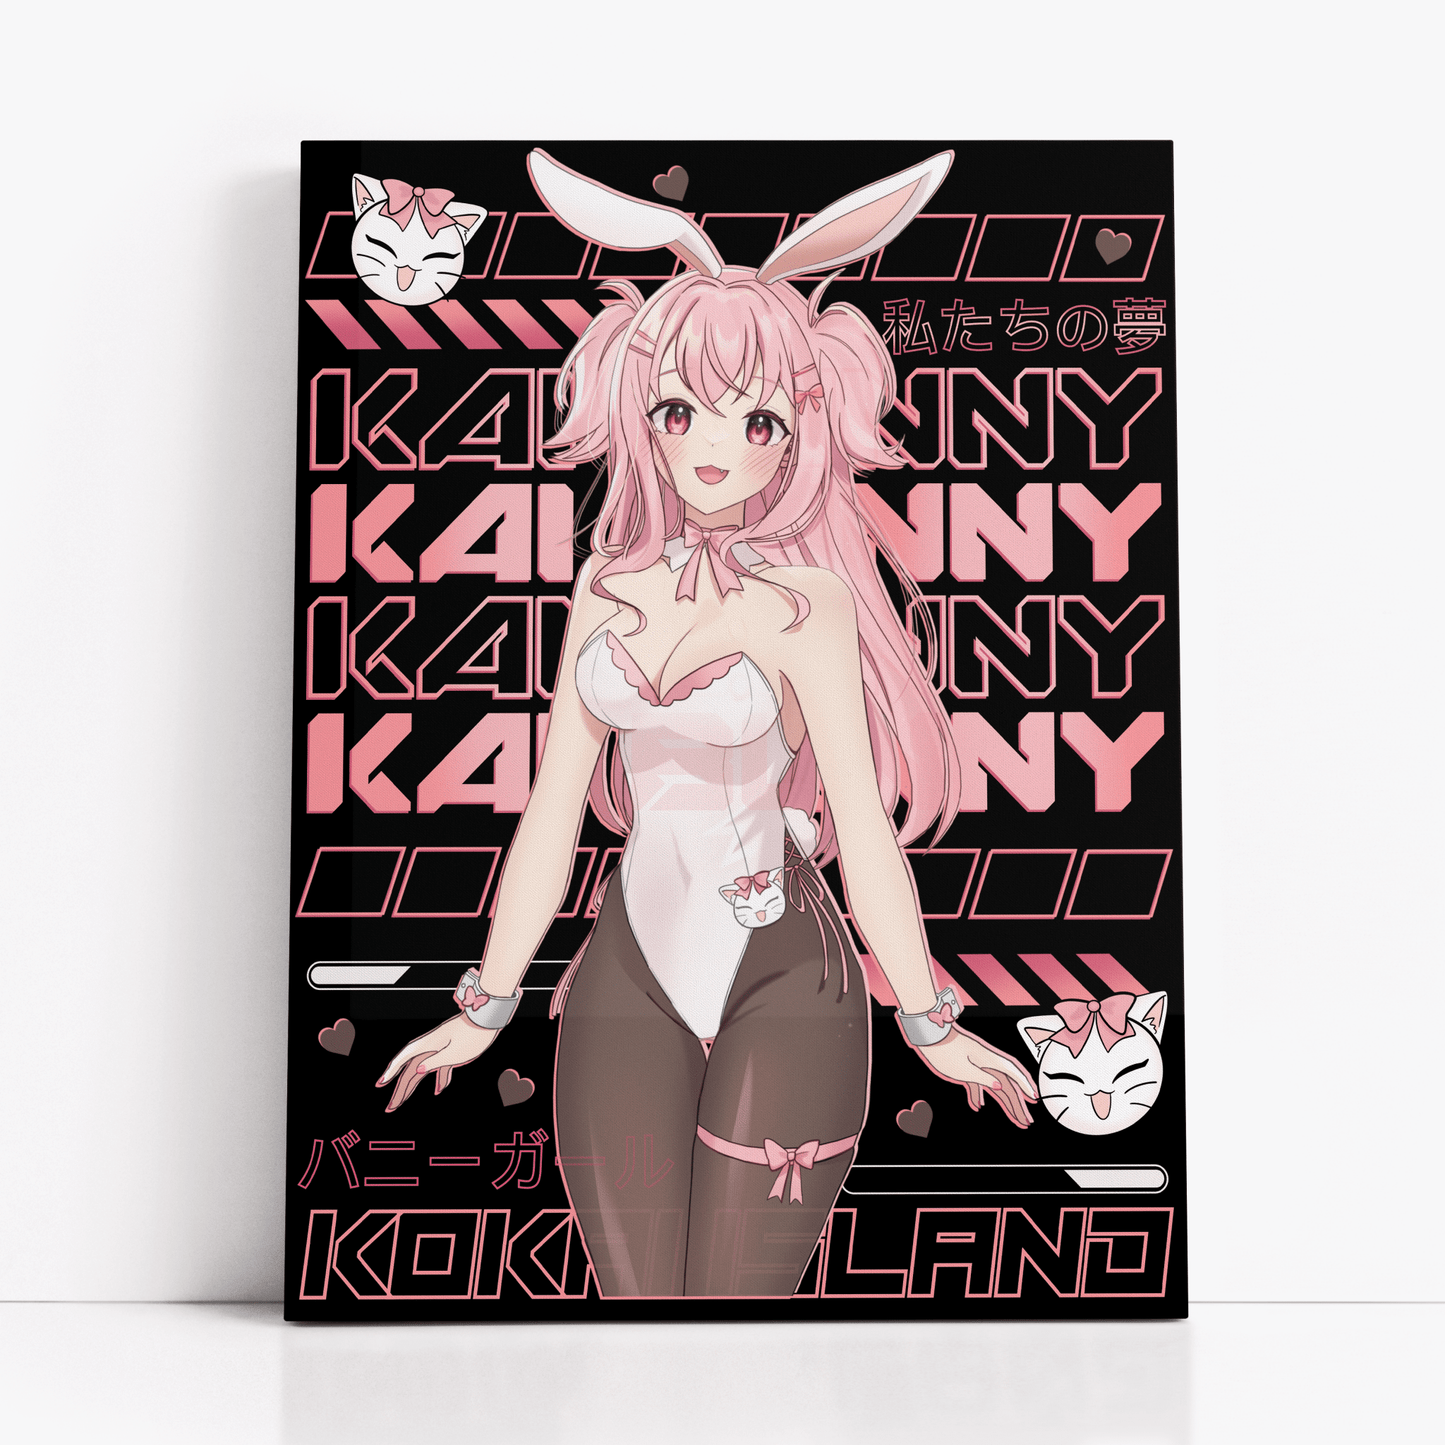 Kai Bunny - OC Collection PrintPrintKokai Island